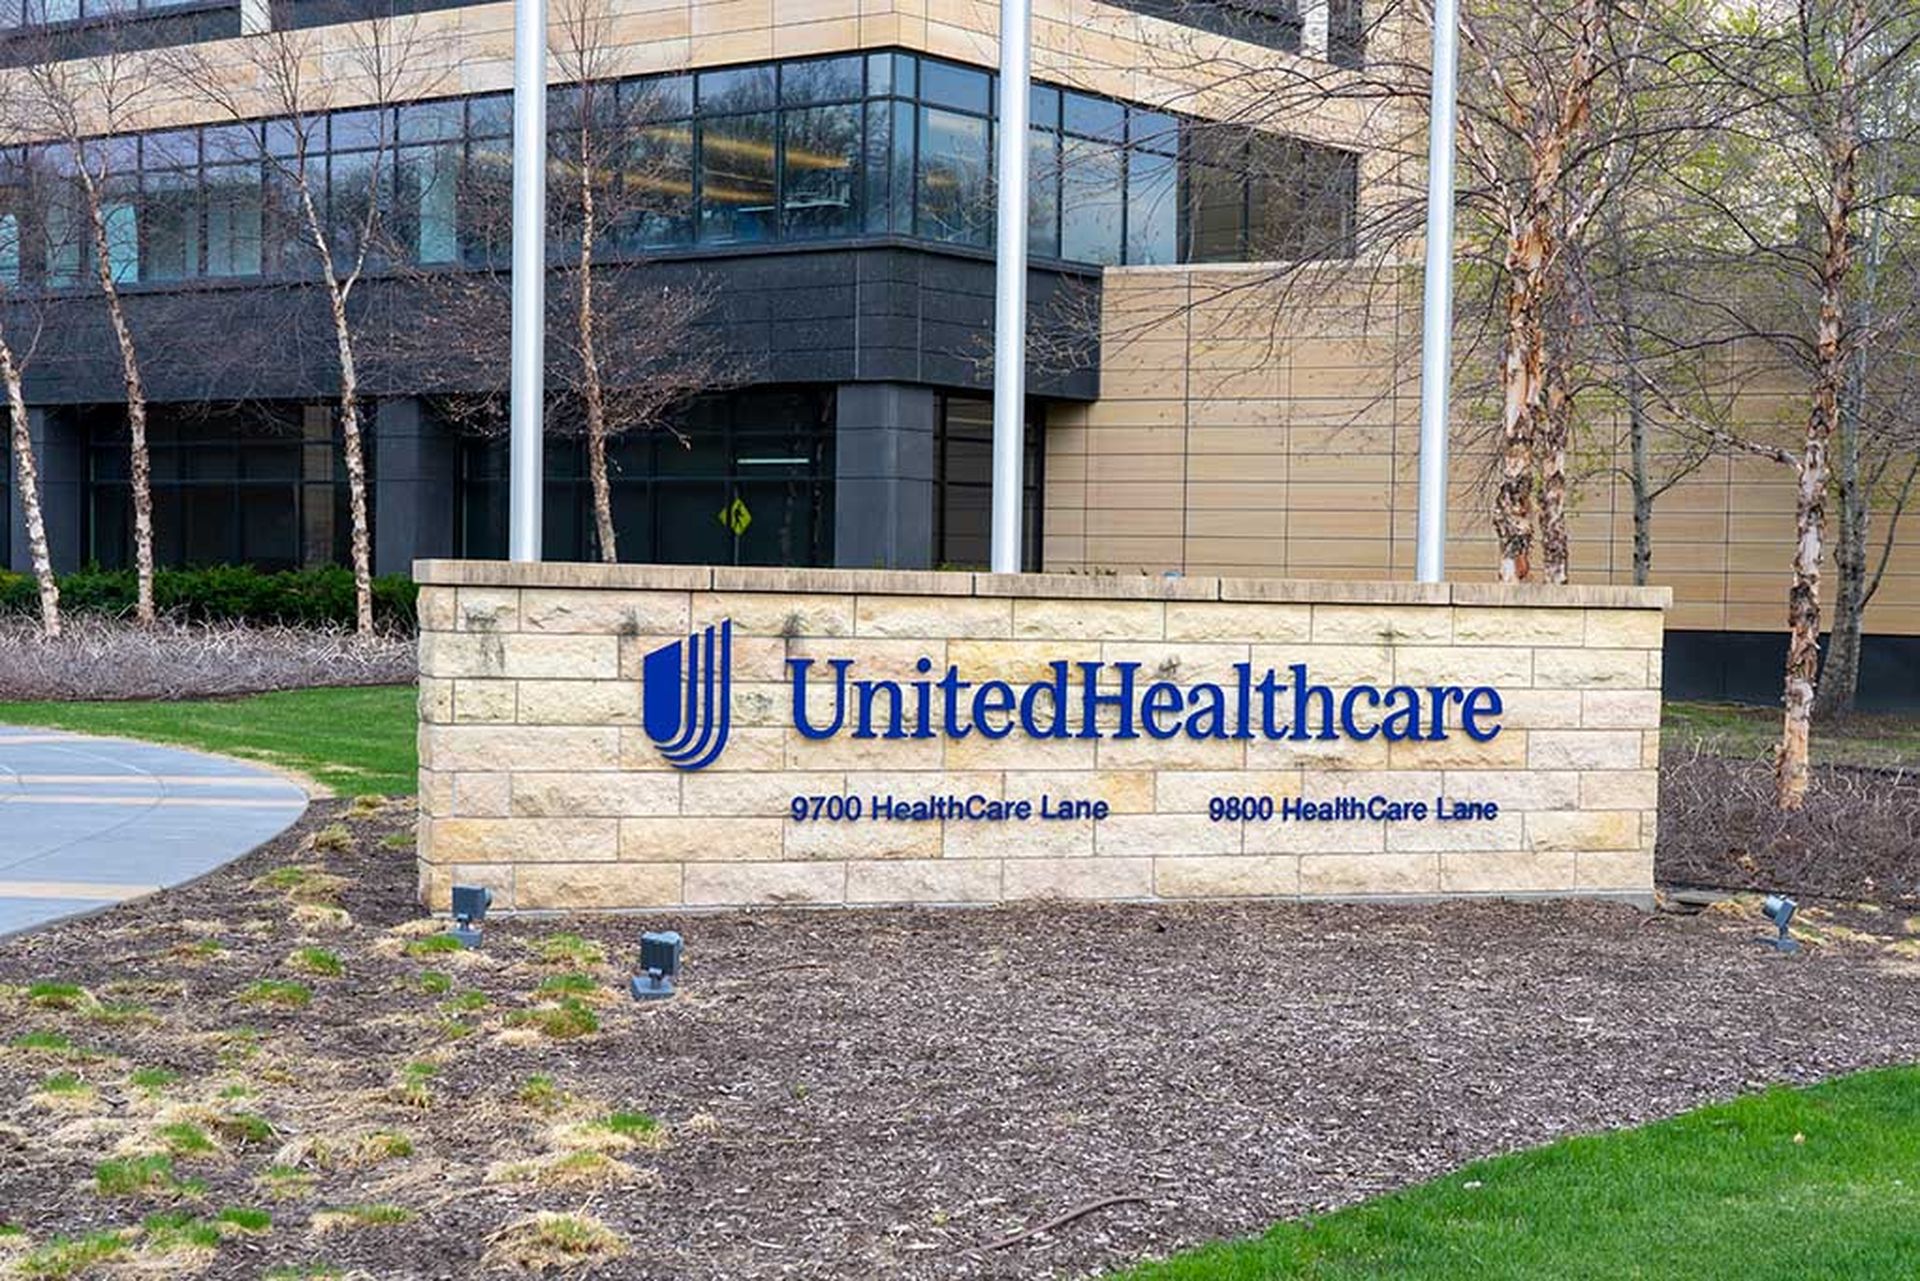 UnitedHealthcare's Change Healthcare